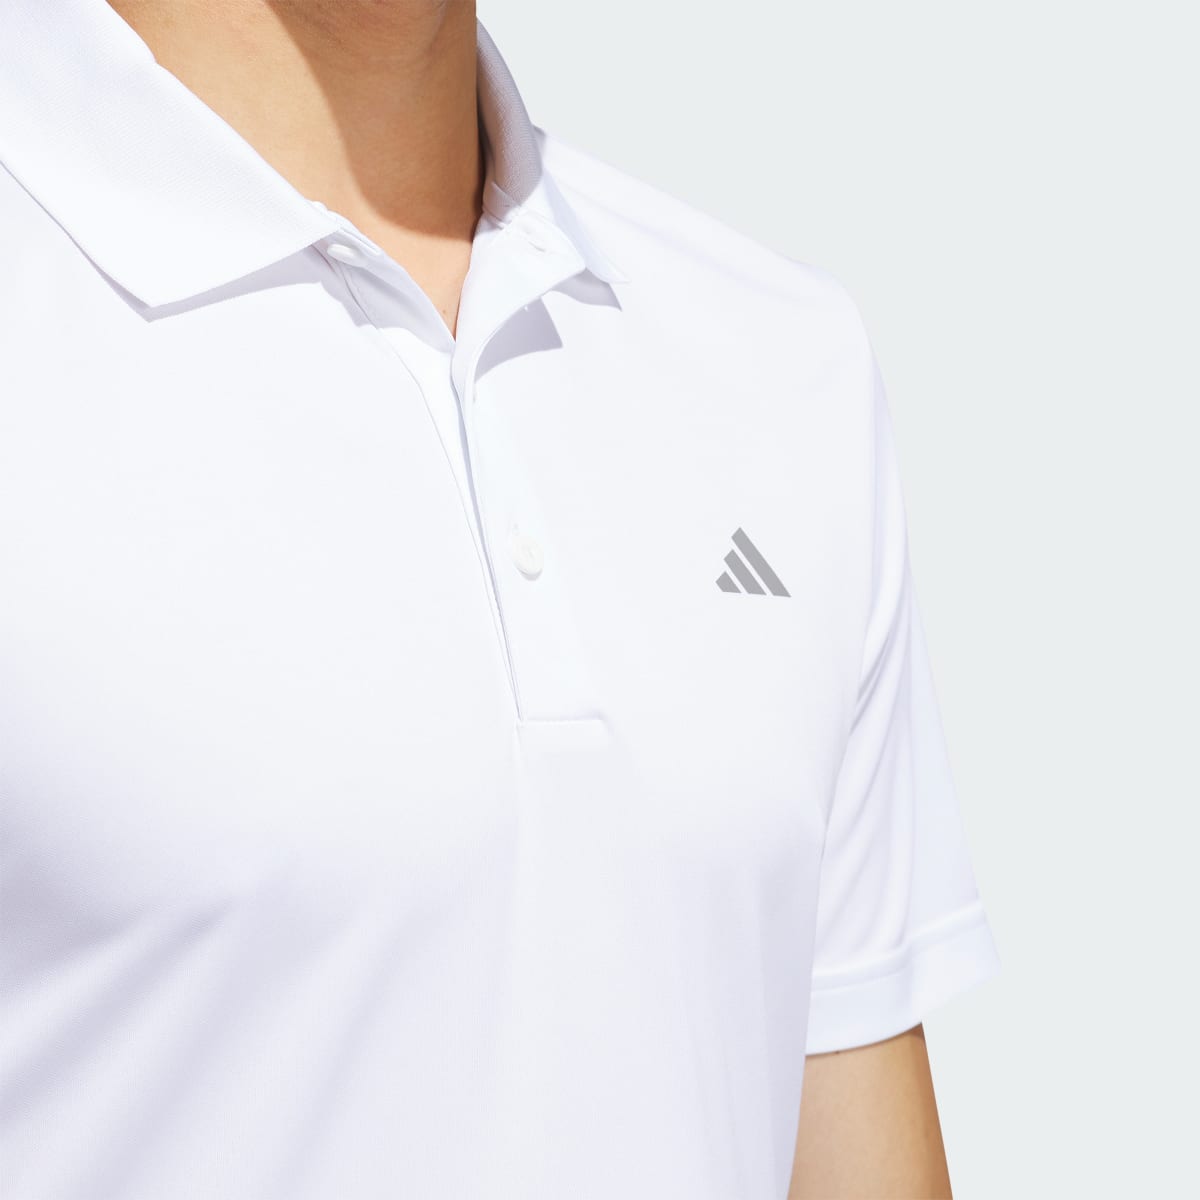 Adidas Adi Performance Polo Shirt. 7